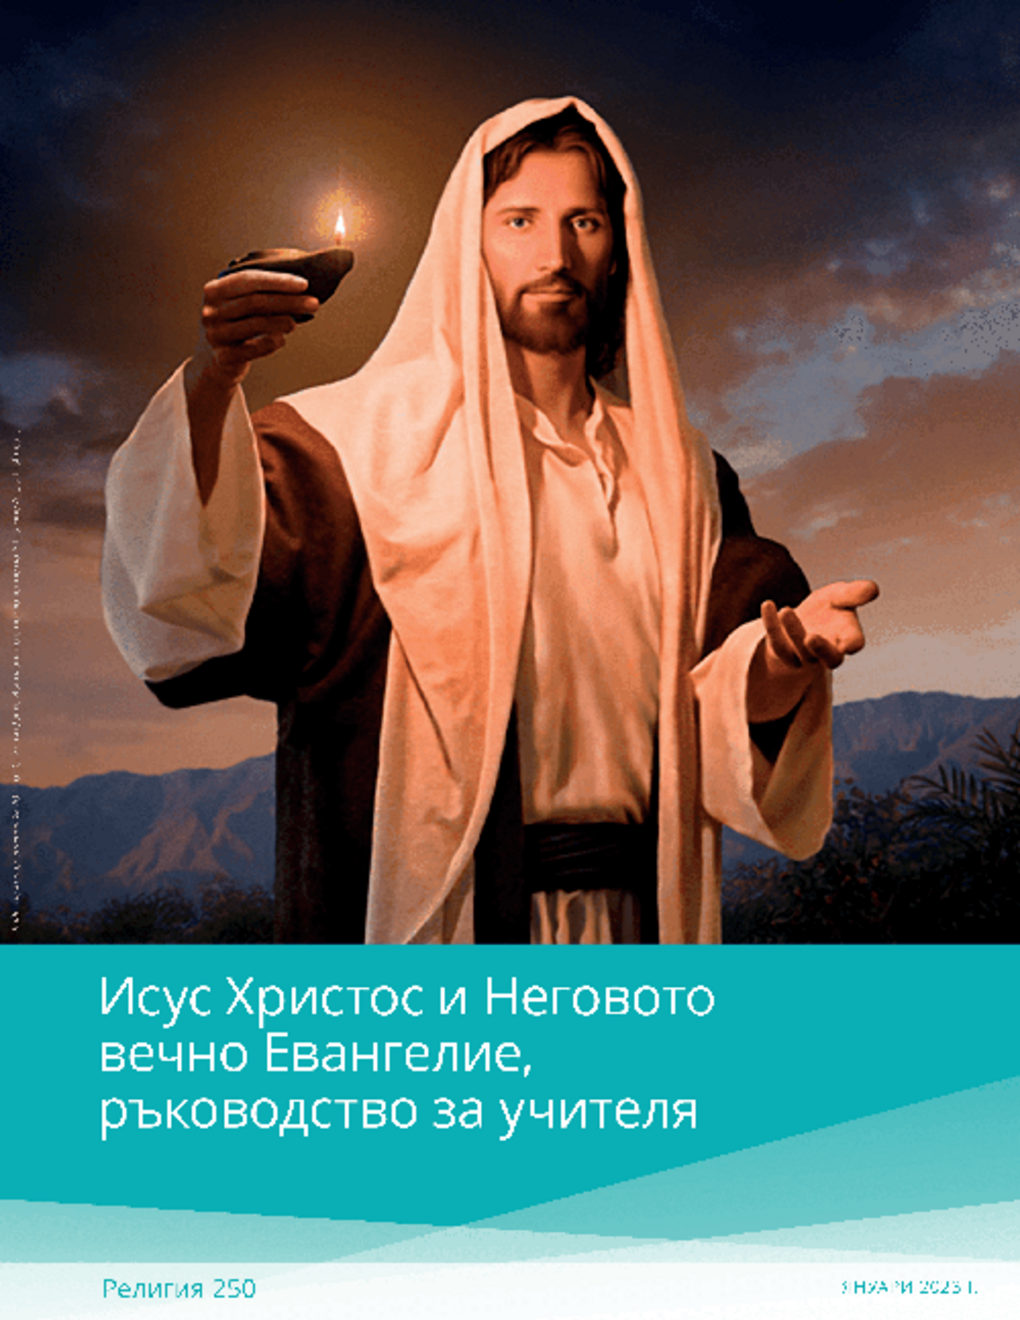 Исус Христос и Неговото вечно Евангелие, ръководство за учителя (Религия 250)